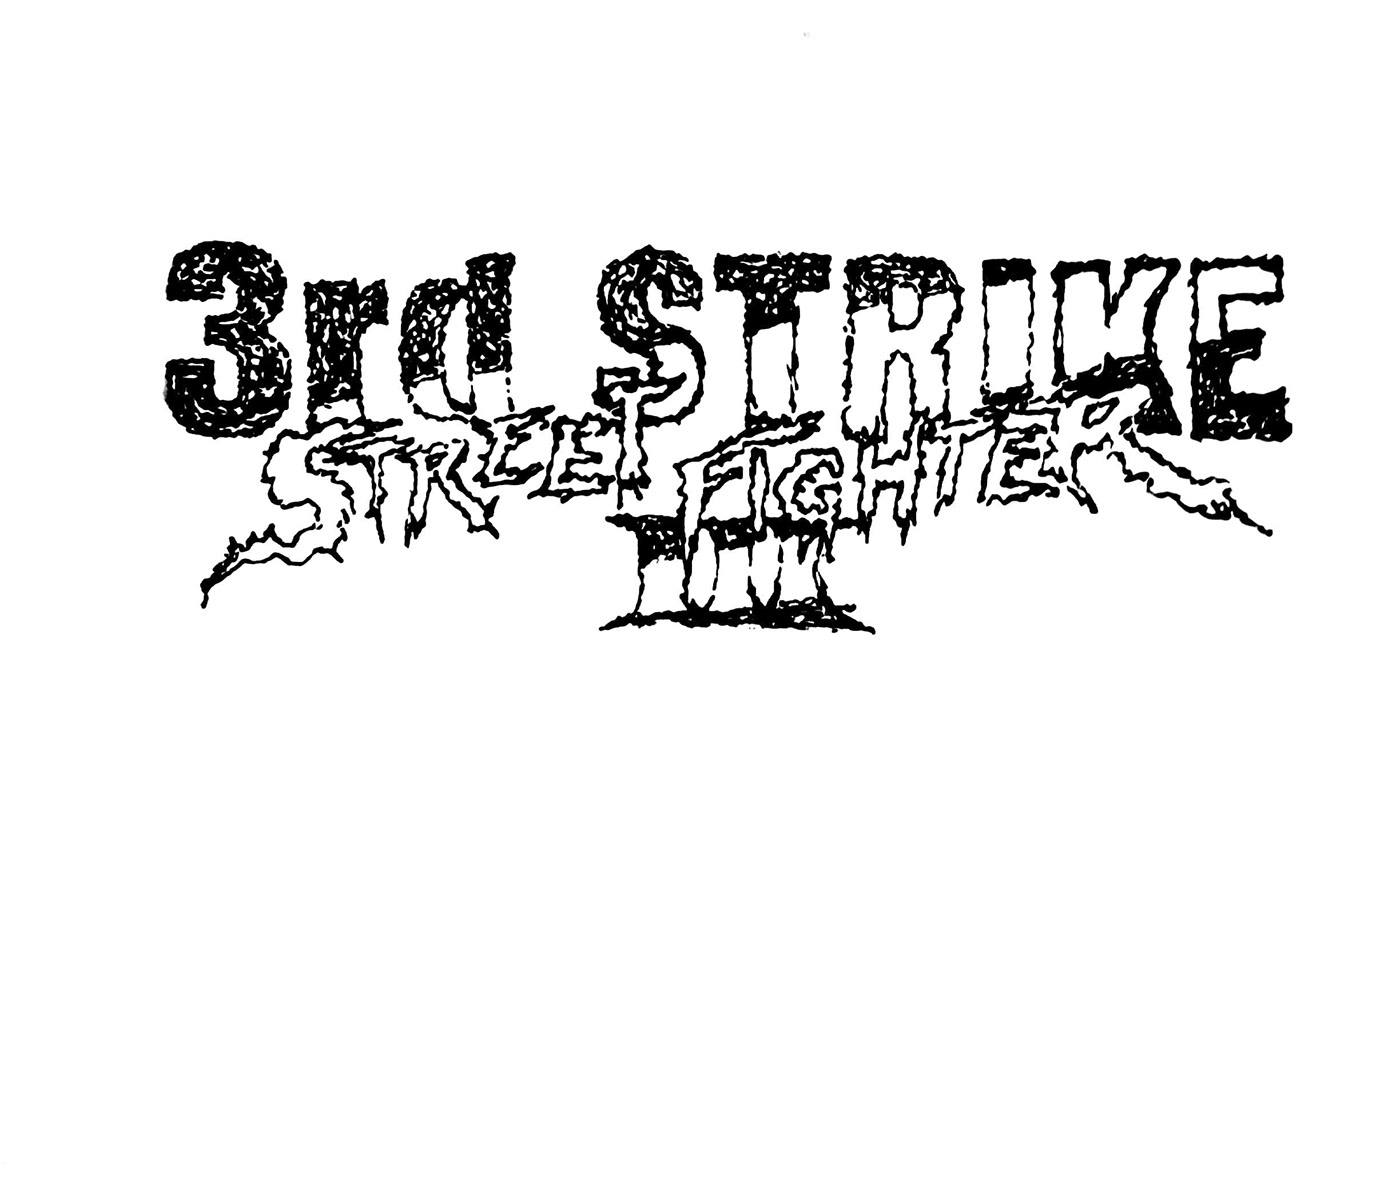 3rd Strike fgc fighting games ink Q3rdstrike STREET FIGHTER